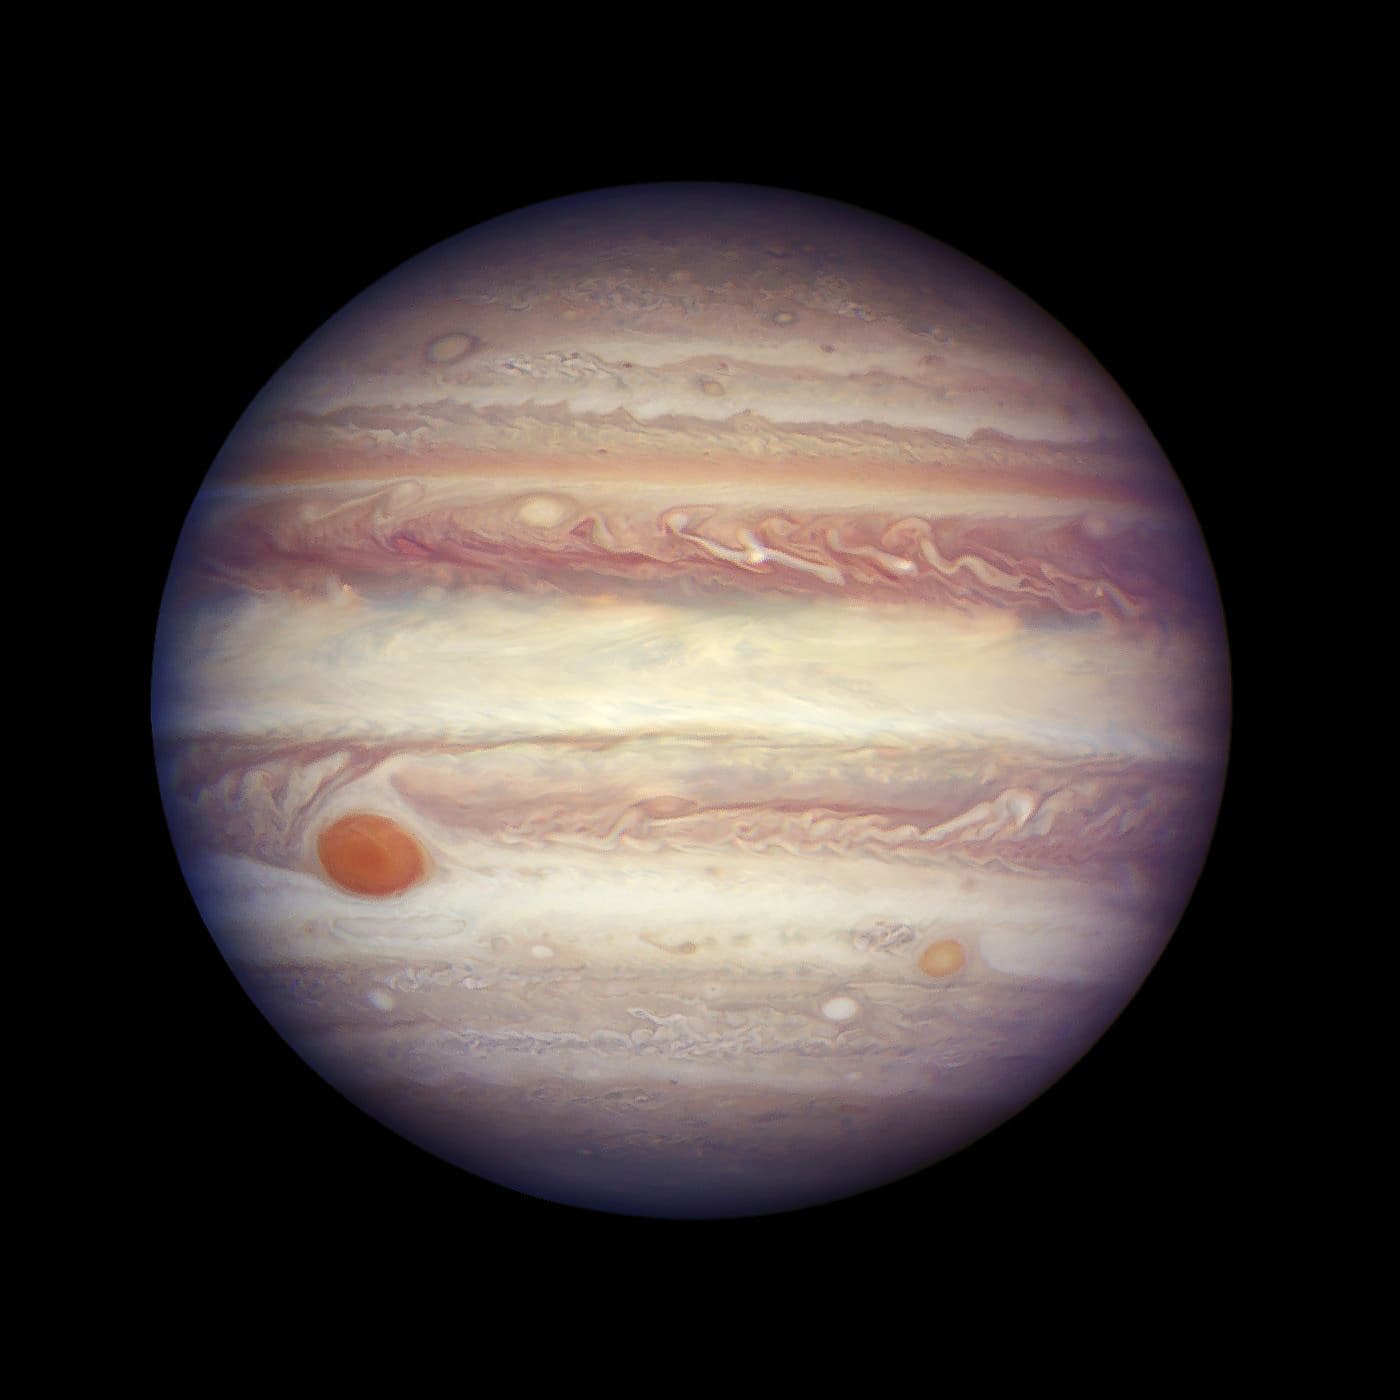 A ‘pancake’ on Jupiter: Juno probe reveals details of Great Red Spot